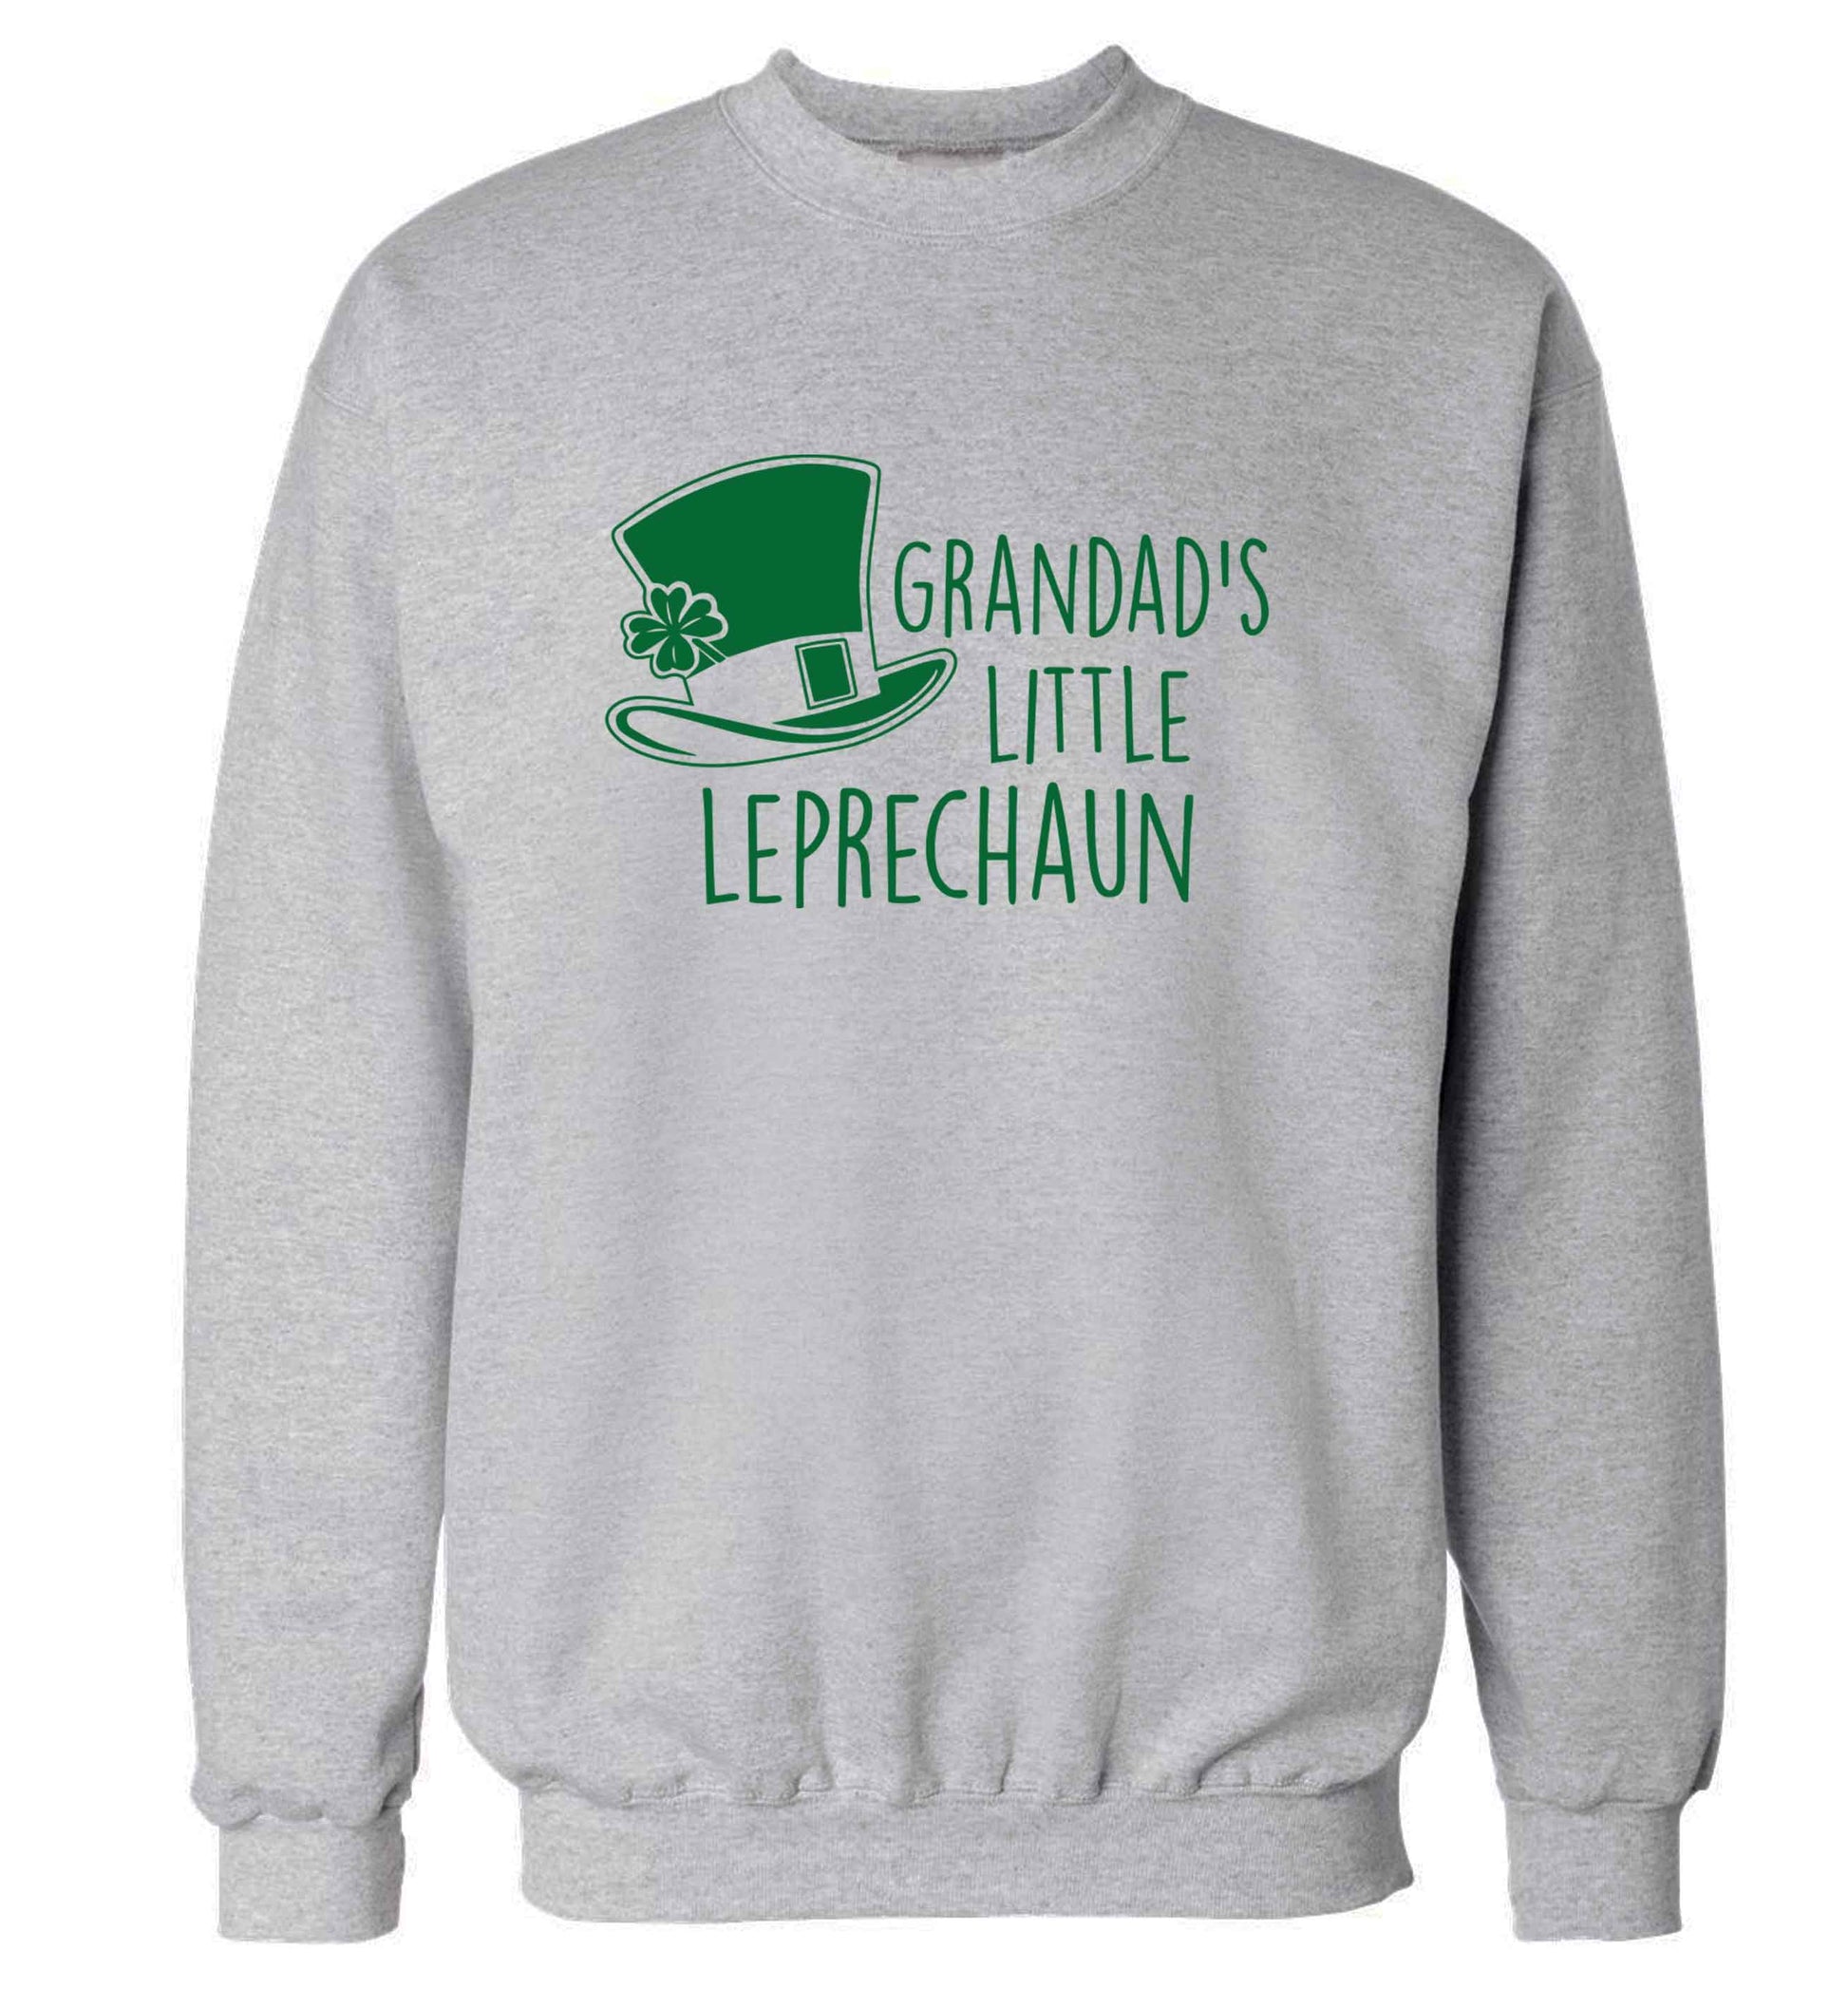 Grandad's little leprechaun adult's unisex grey sweater 2XL